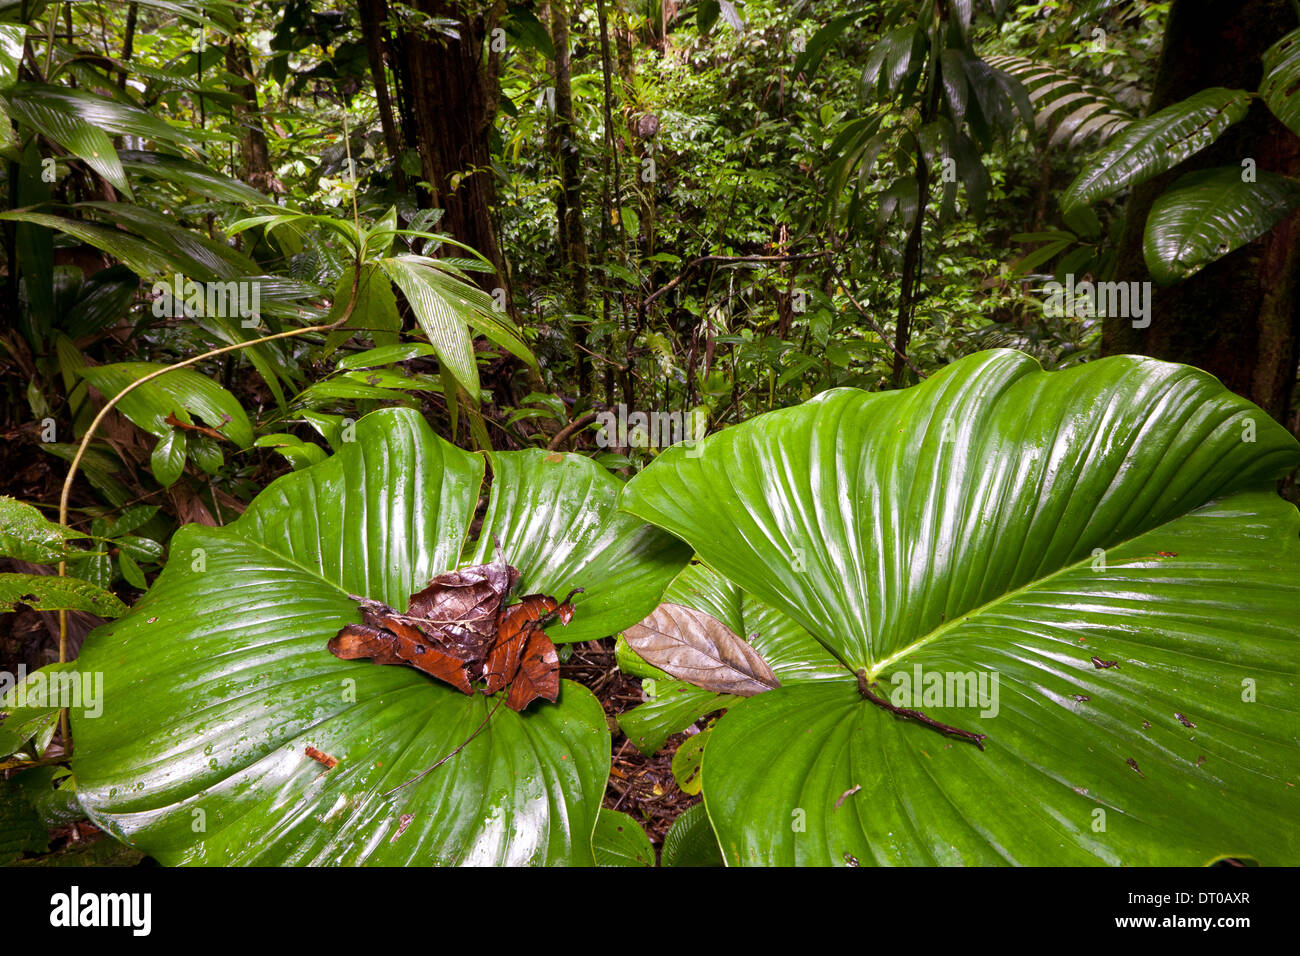 Grosse nasse Blätter im premontane feuchten tropischen Regenwald in Burbayar Naturschutzgebiet, Panama Provinz, Republik Panama. Stockfoto